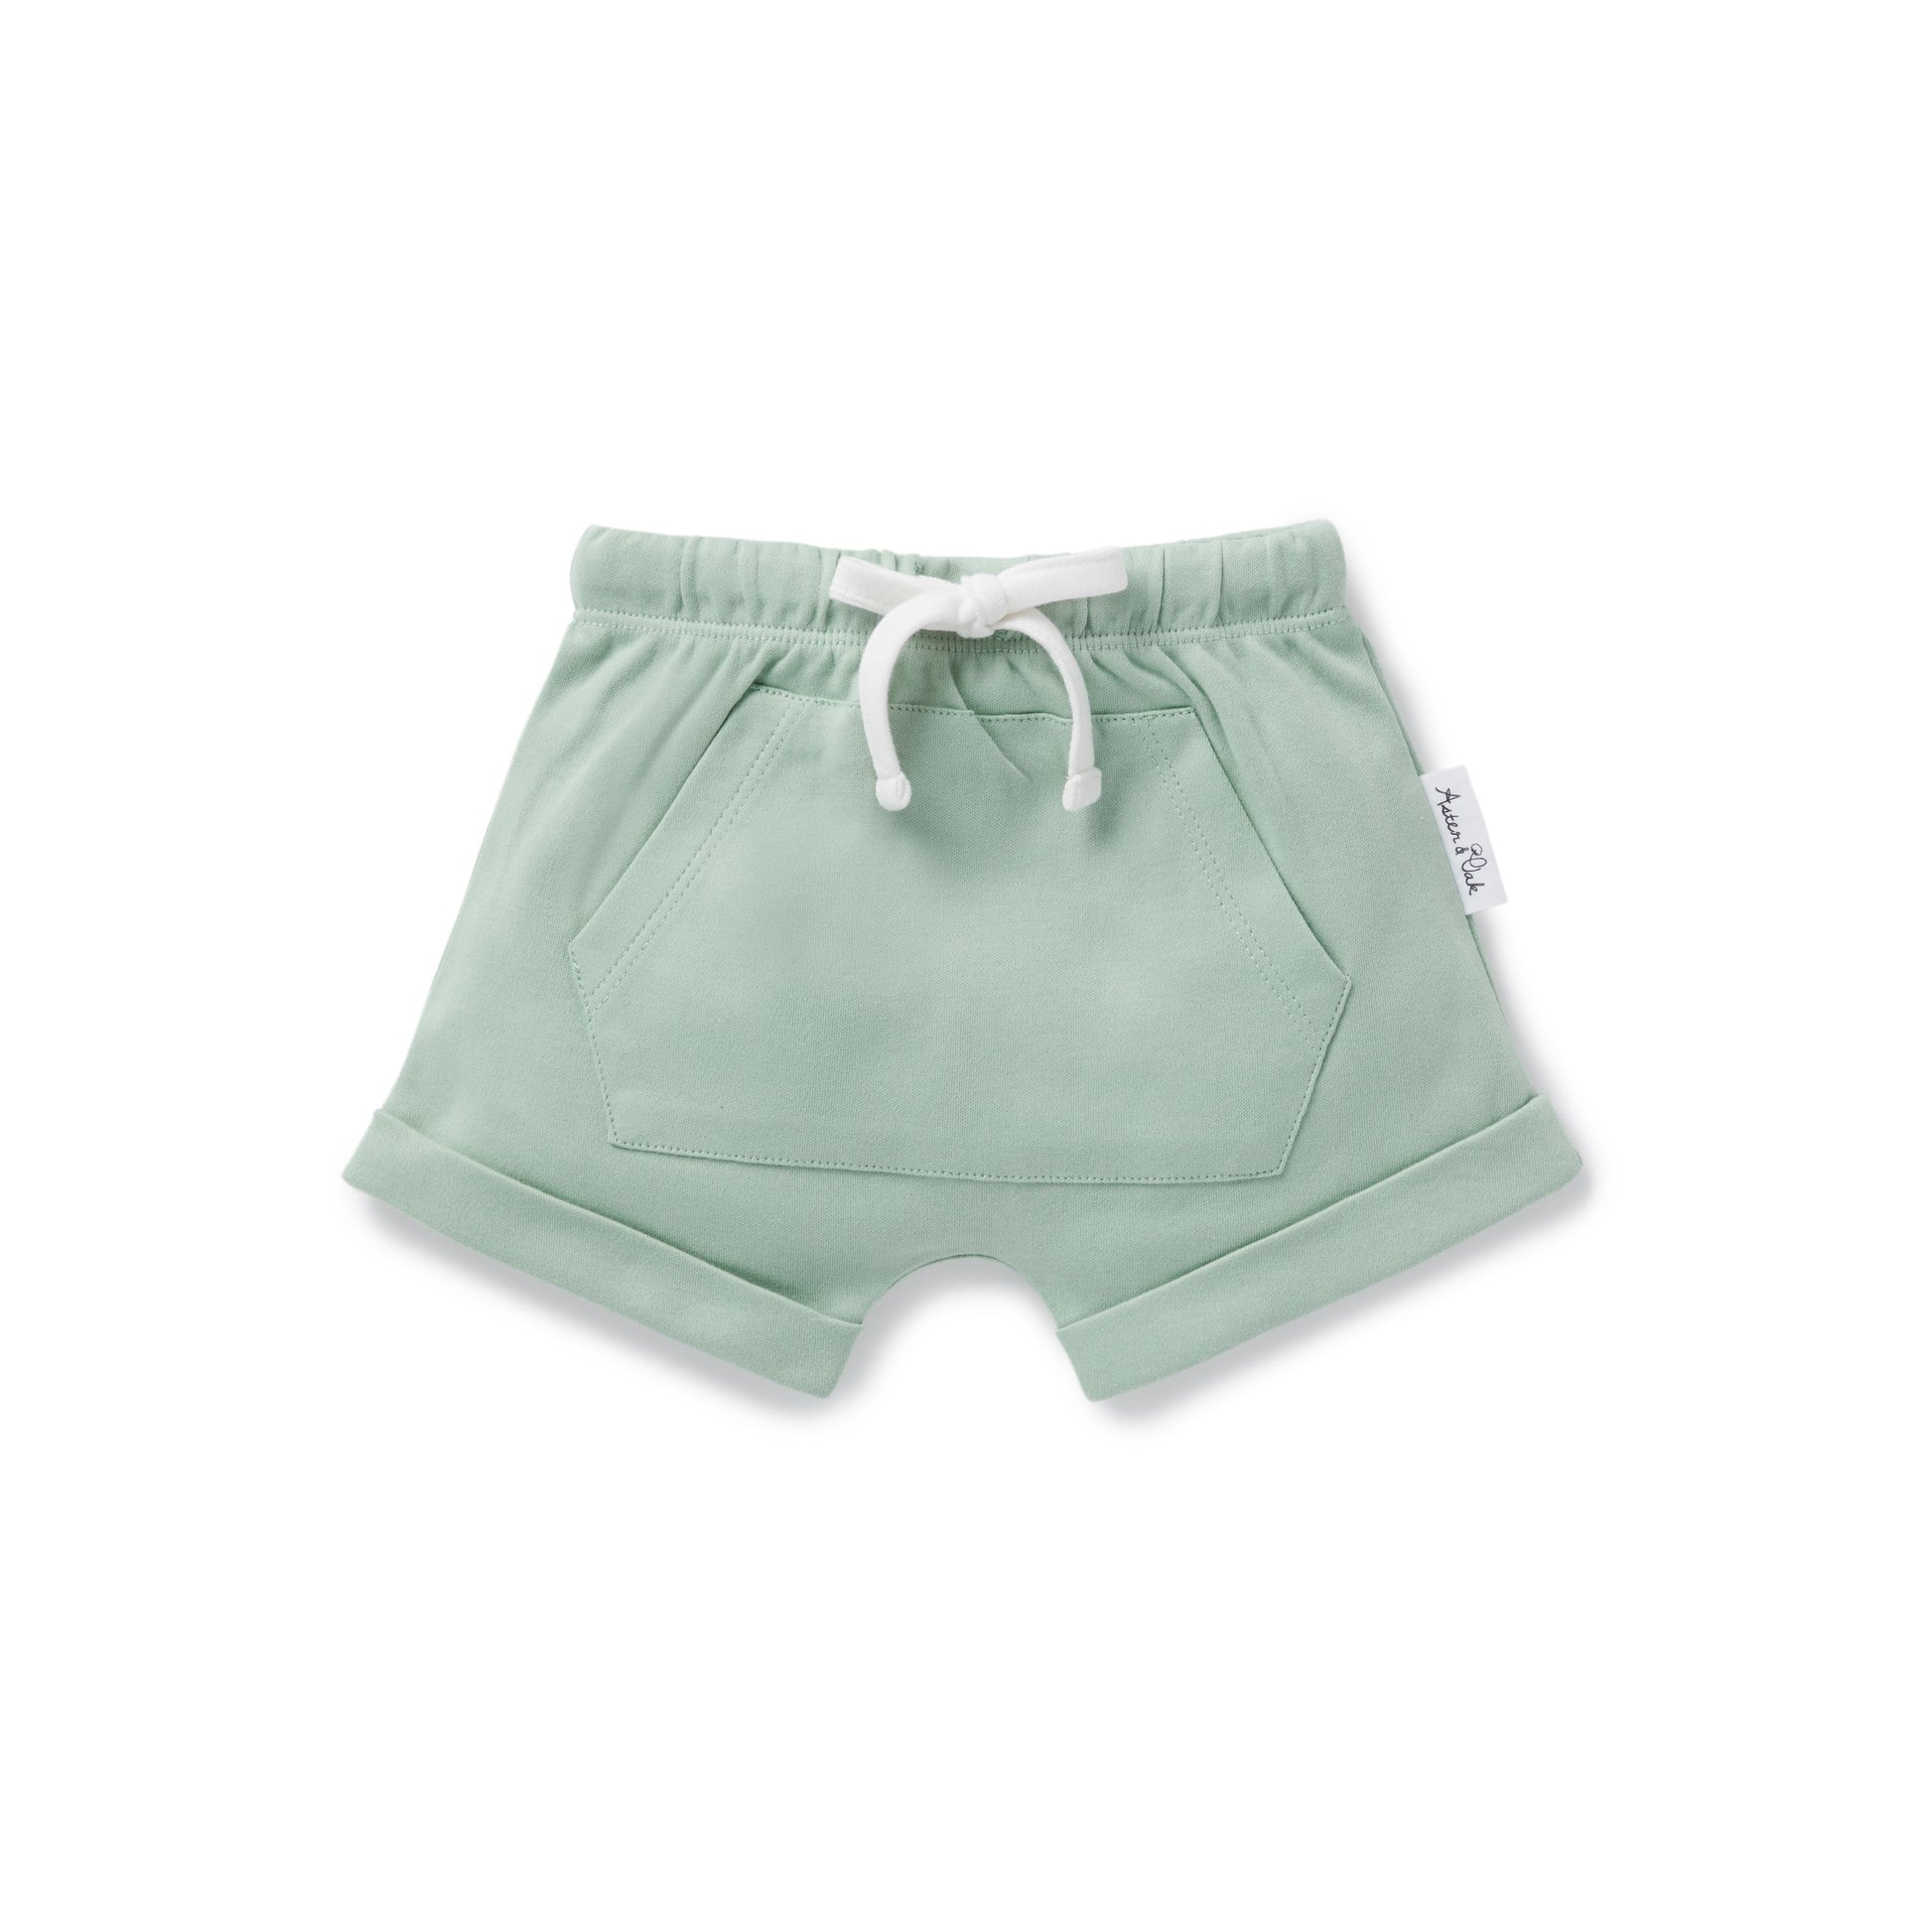 Aster & Oak Silt Green Pocket Shorts.